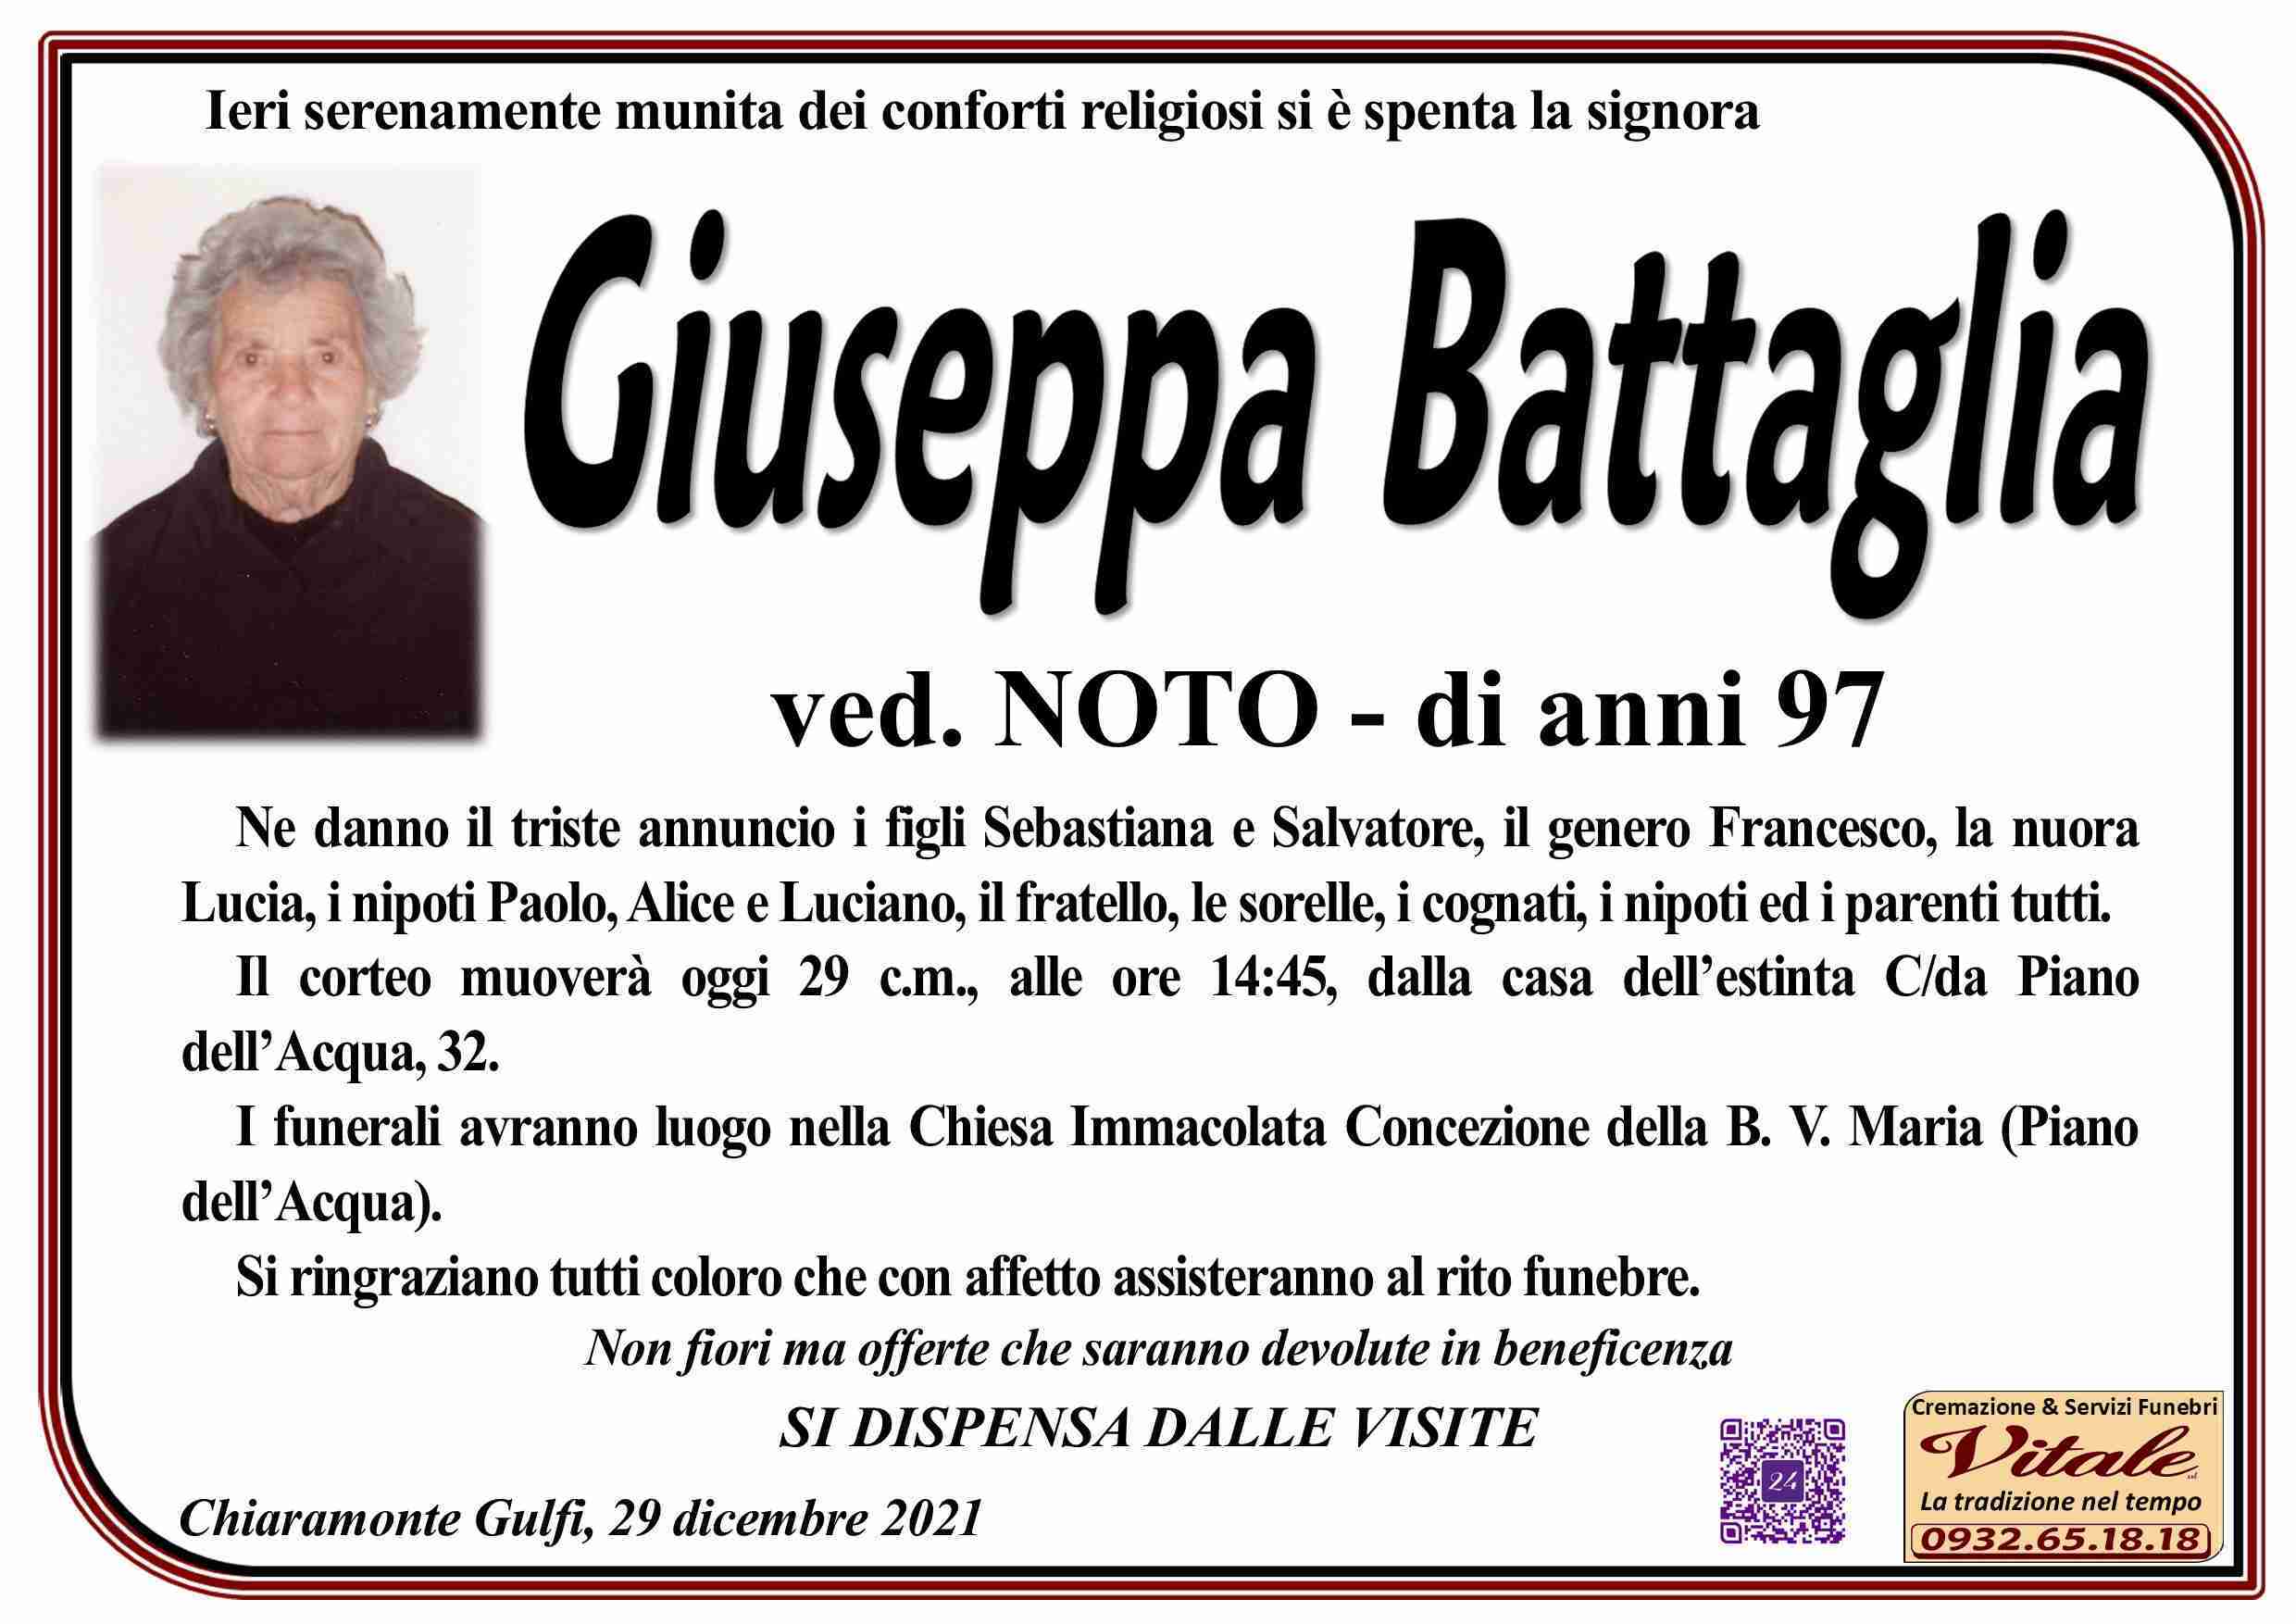 Giuseppa Battaglia